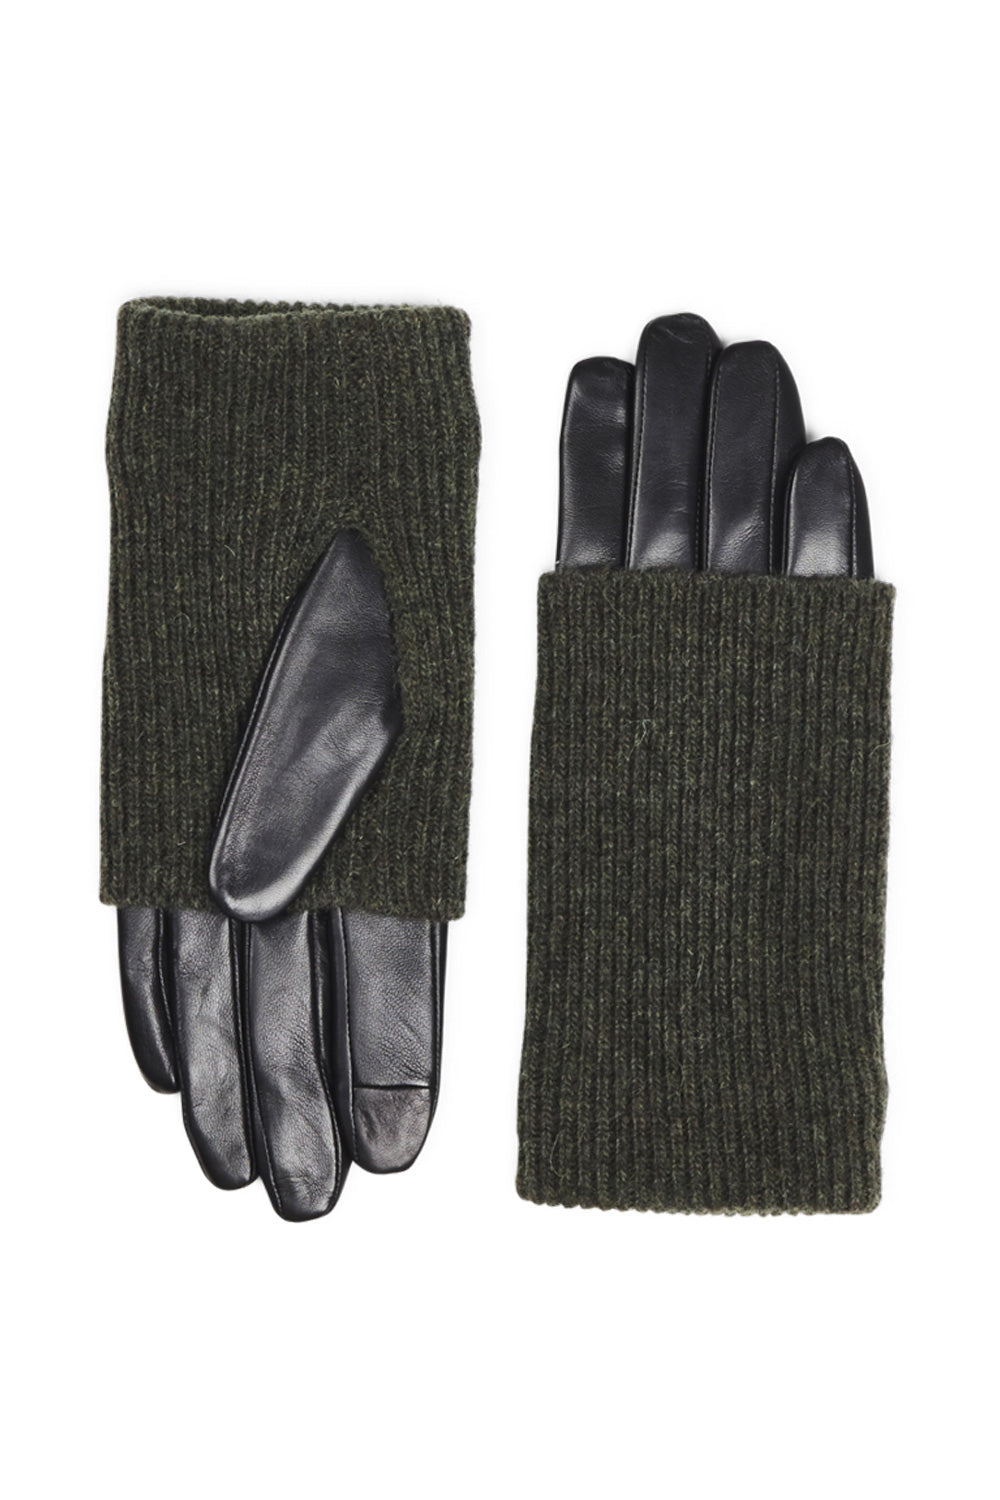 Markberg HellyMBG Glove 108 Black w/Green